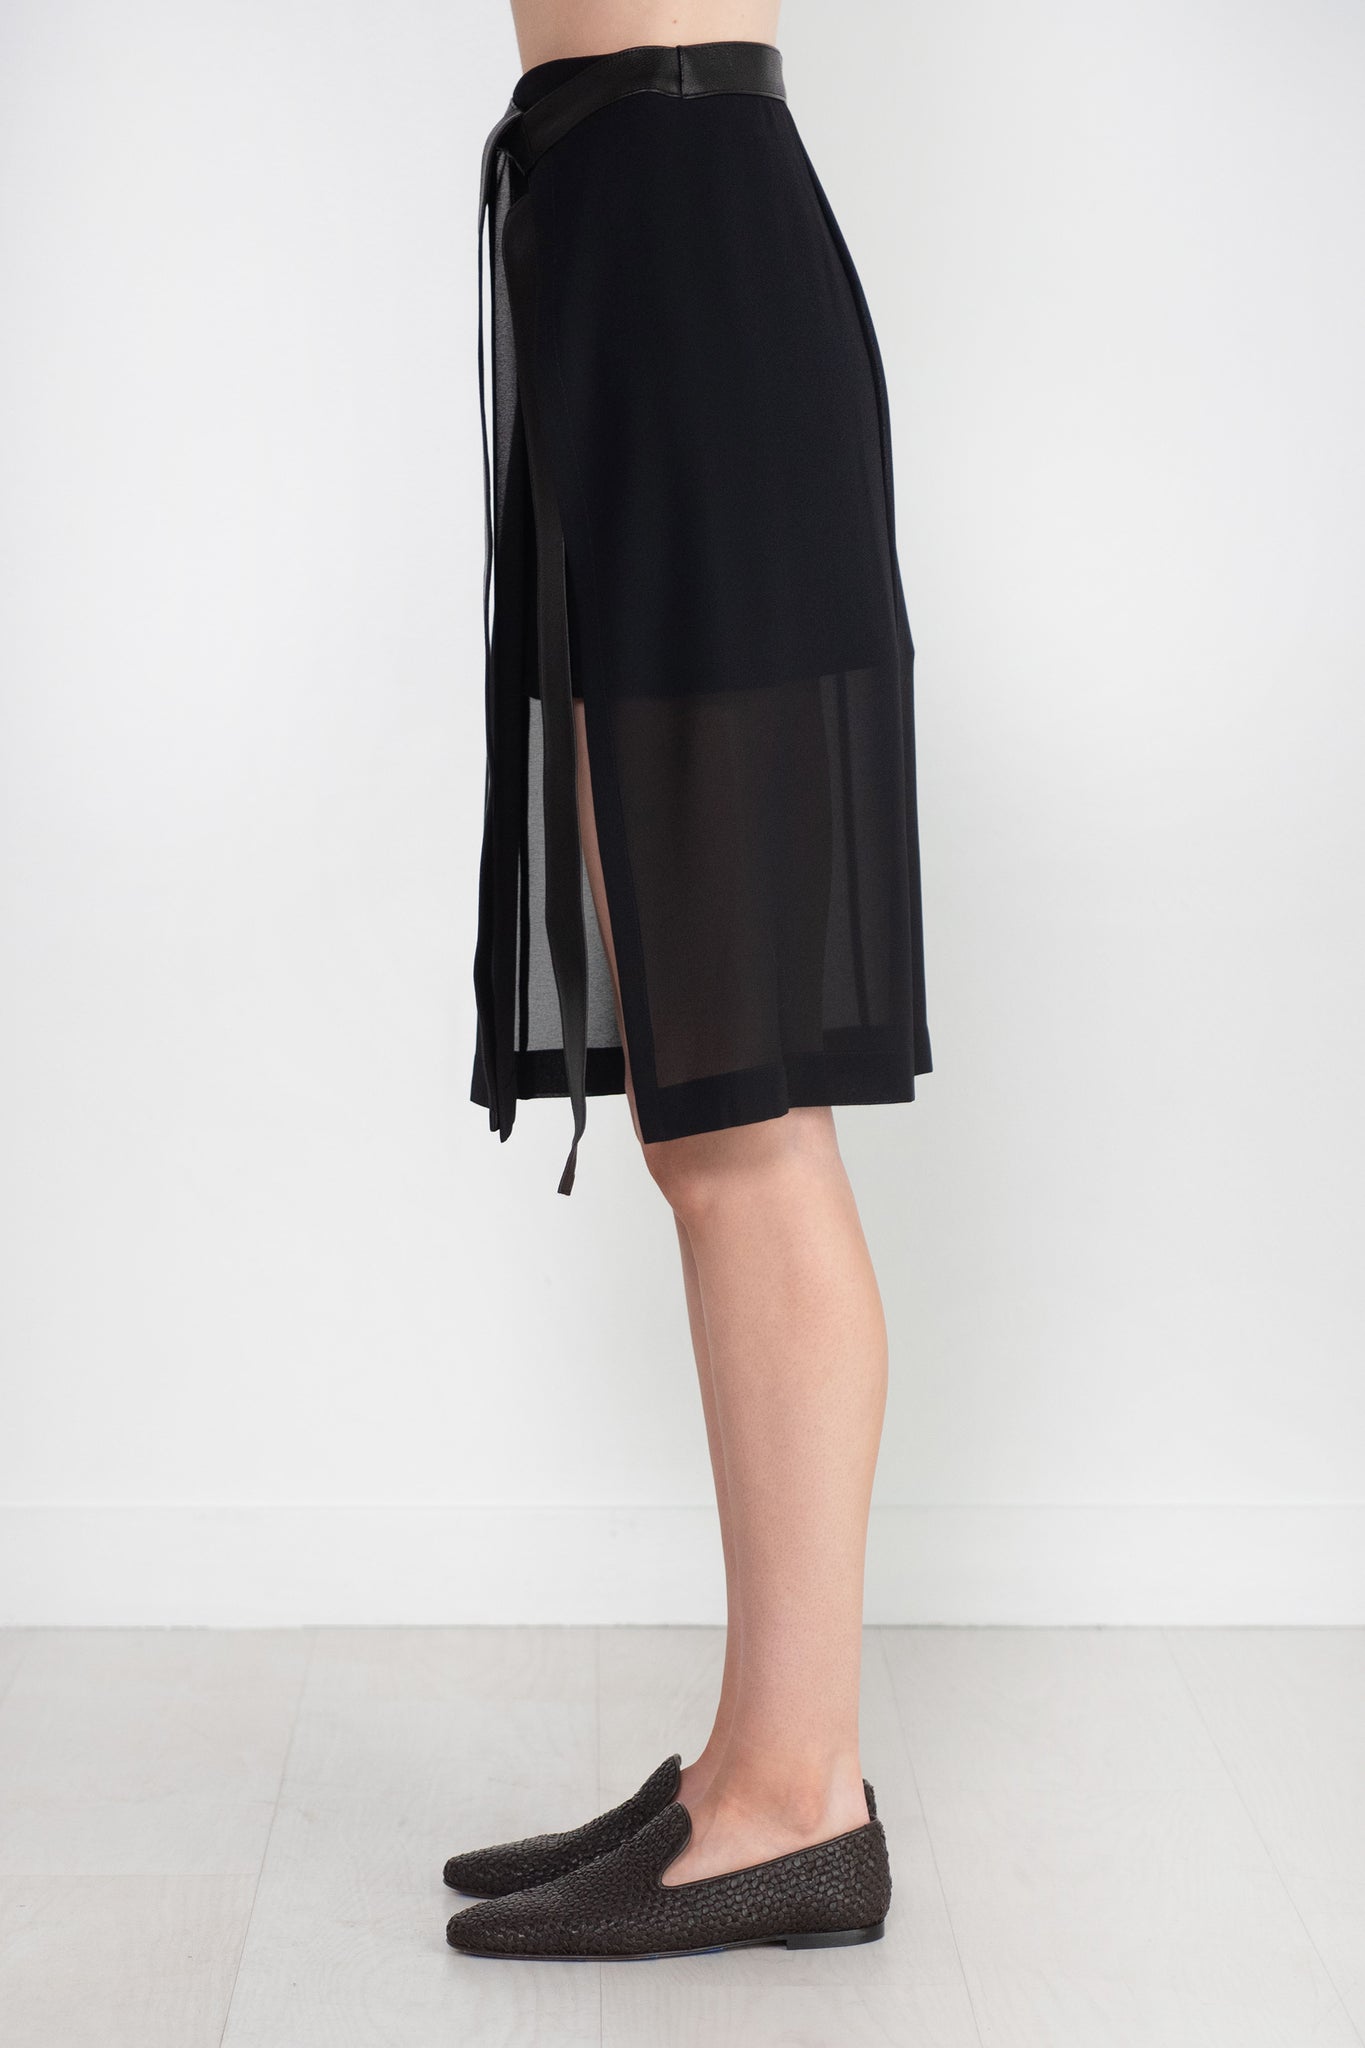 proenza schouler - Crepe Chiffon Wrap Skirt, Black